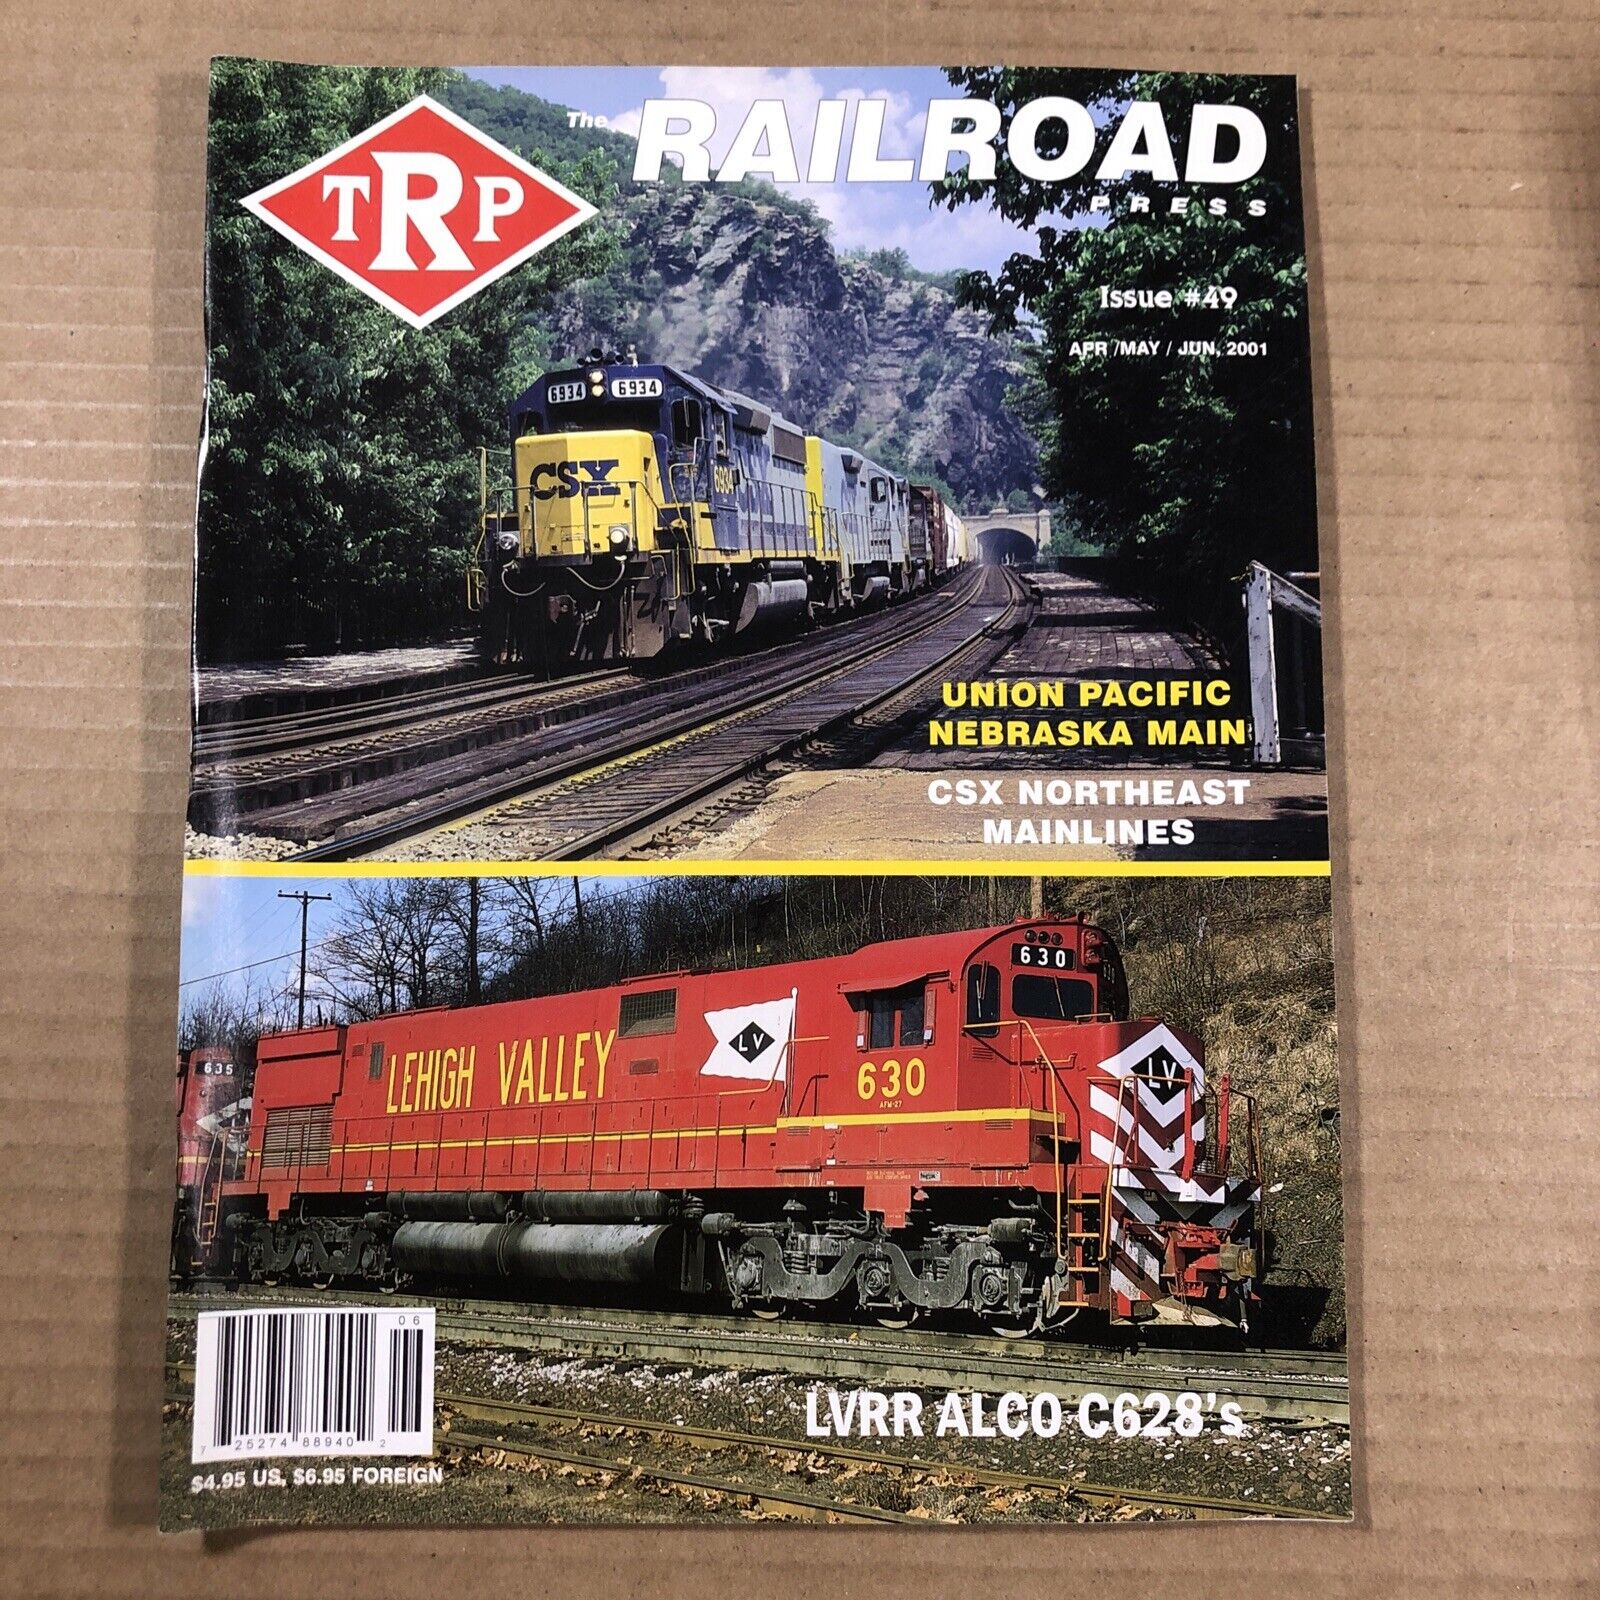 TRP The Railroad Press Magazine Issue 49 - CSX Northeast Mainlines